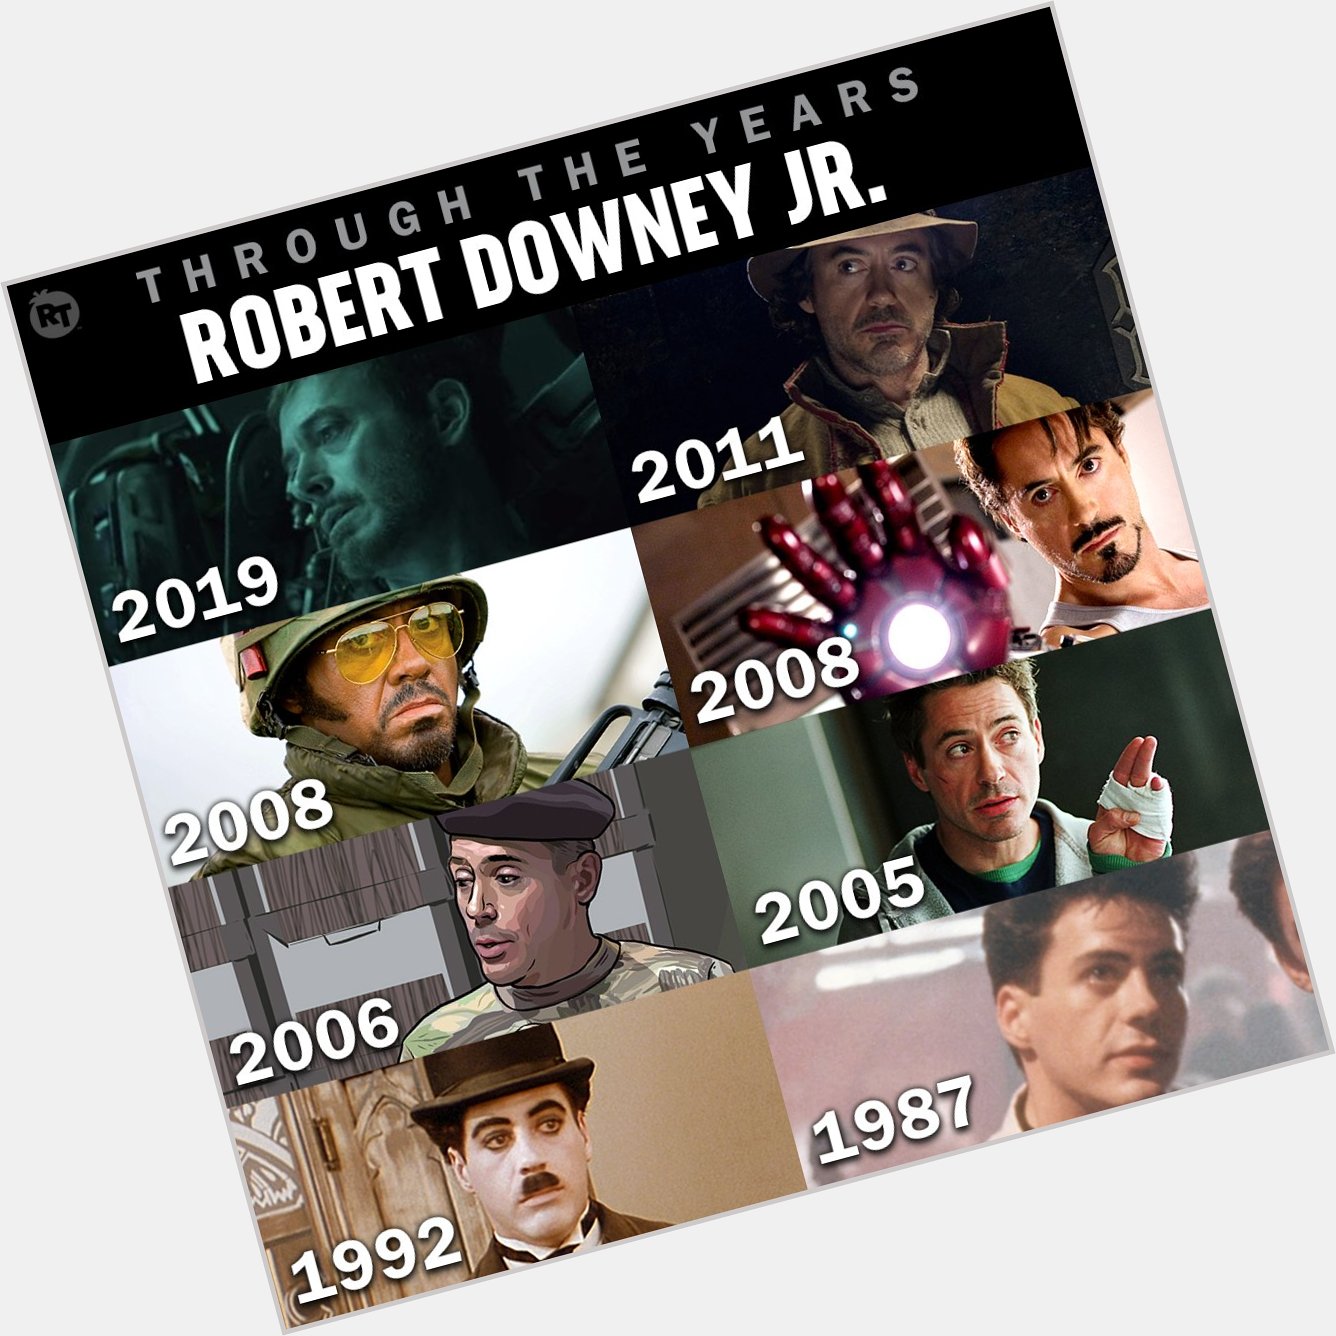 Happy birthday to the Iron Man, Robert Downey Jr! 